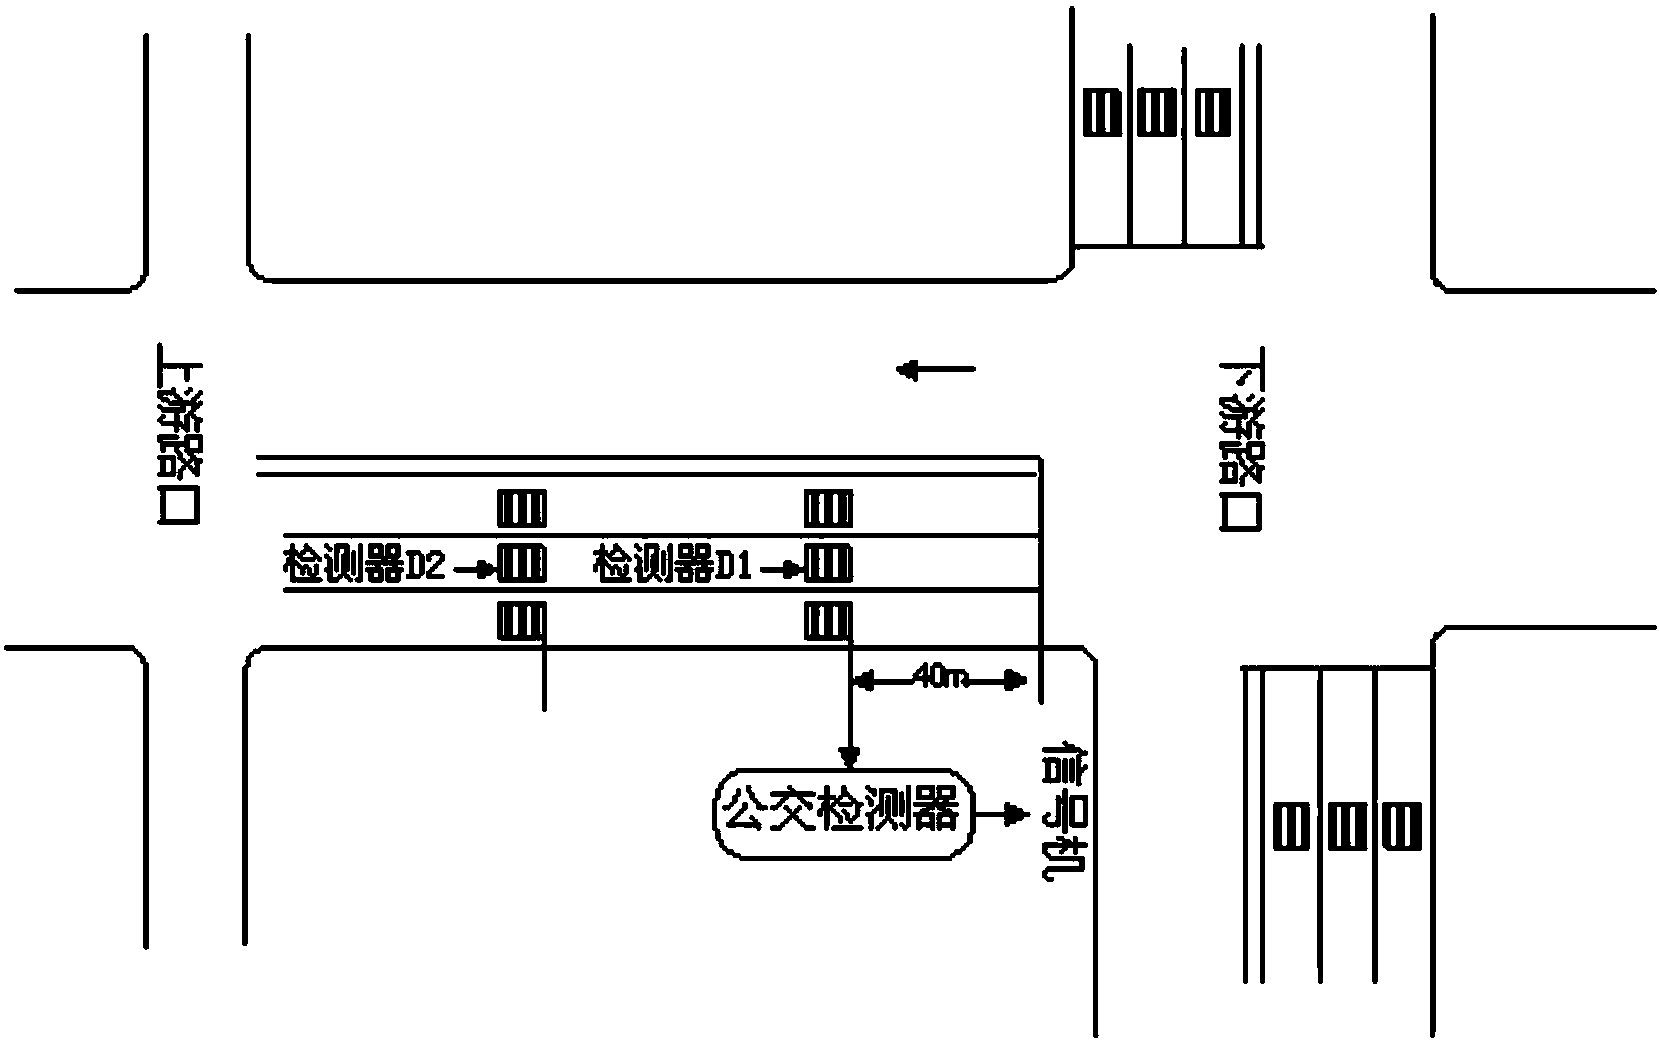 Urban road traffic bus priority signal control method